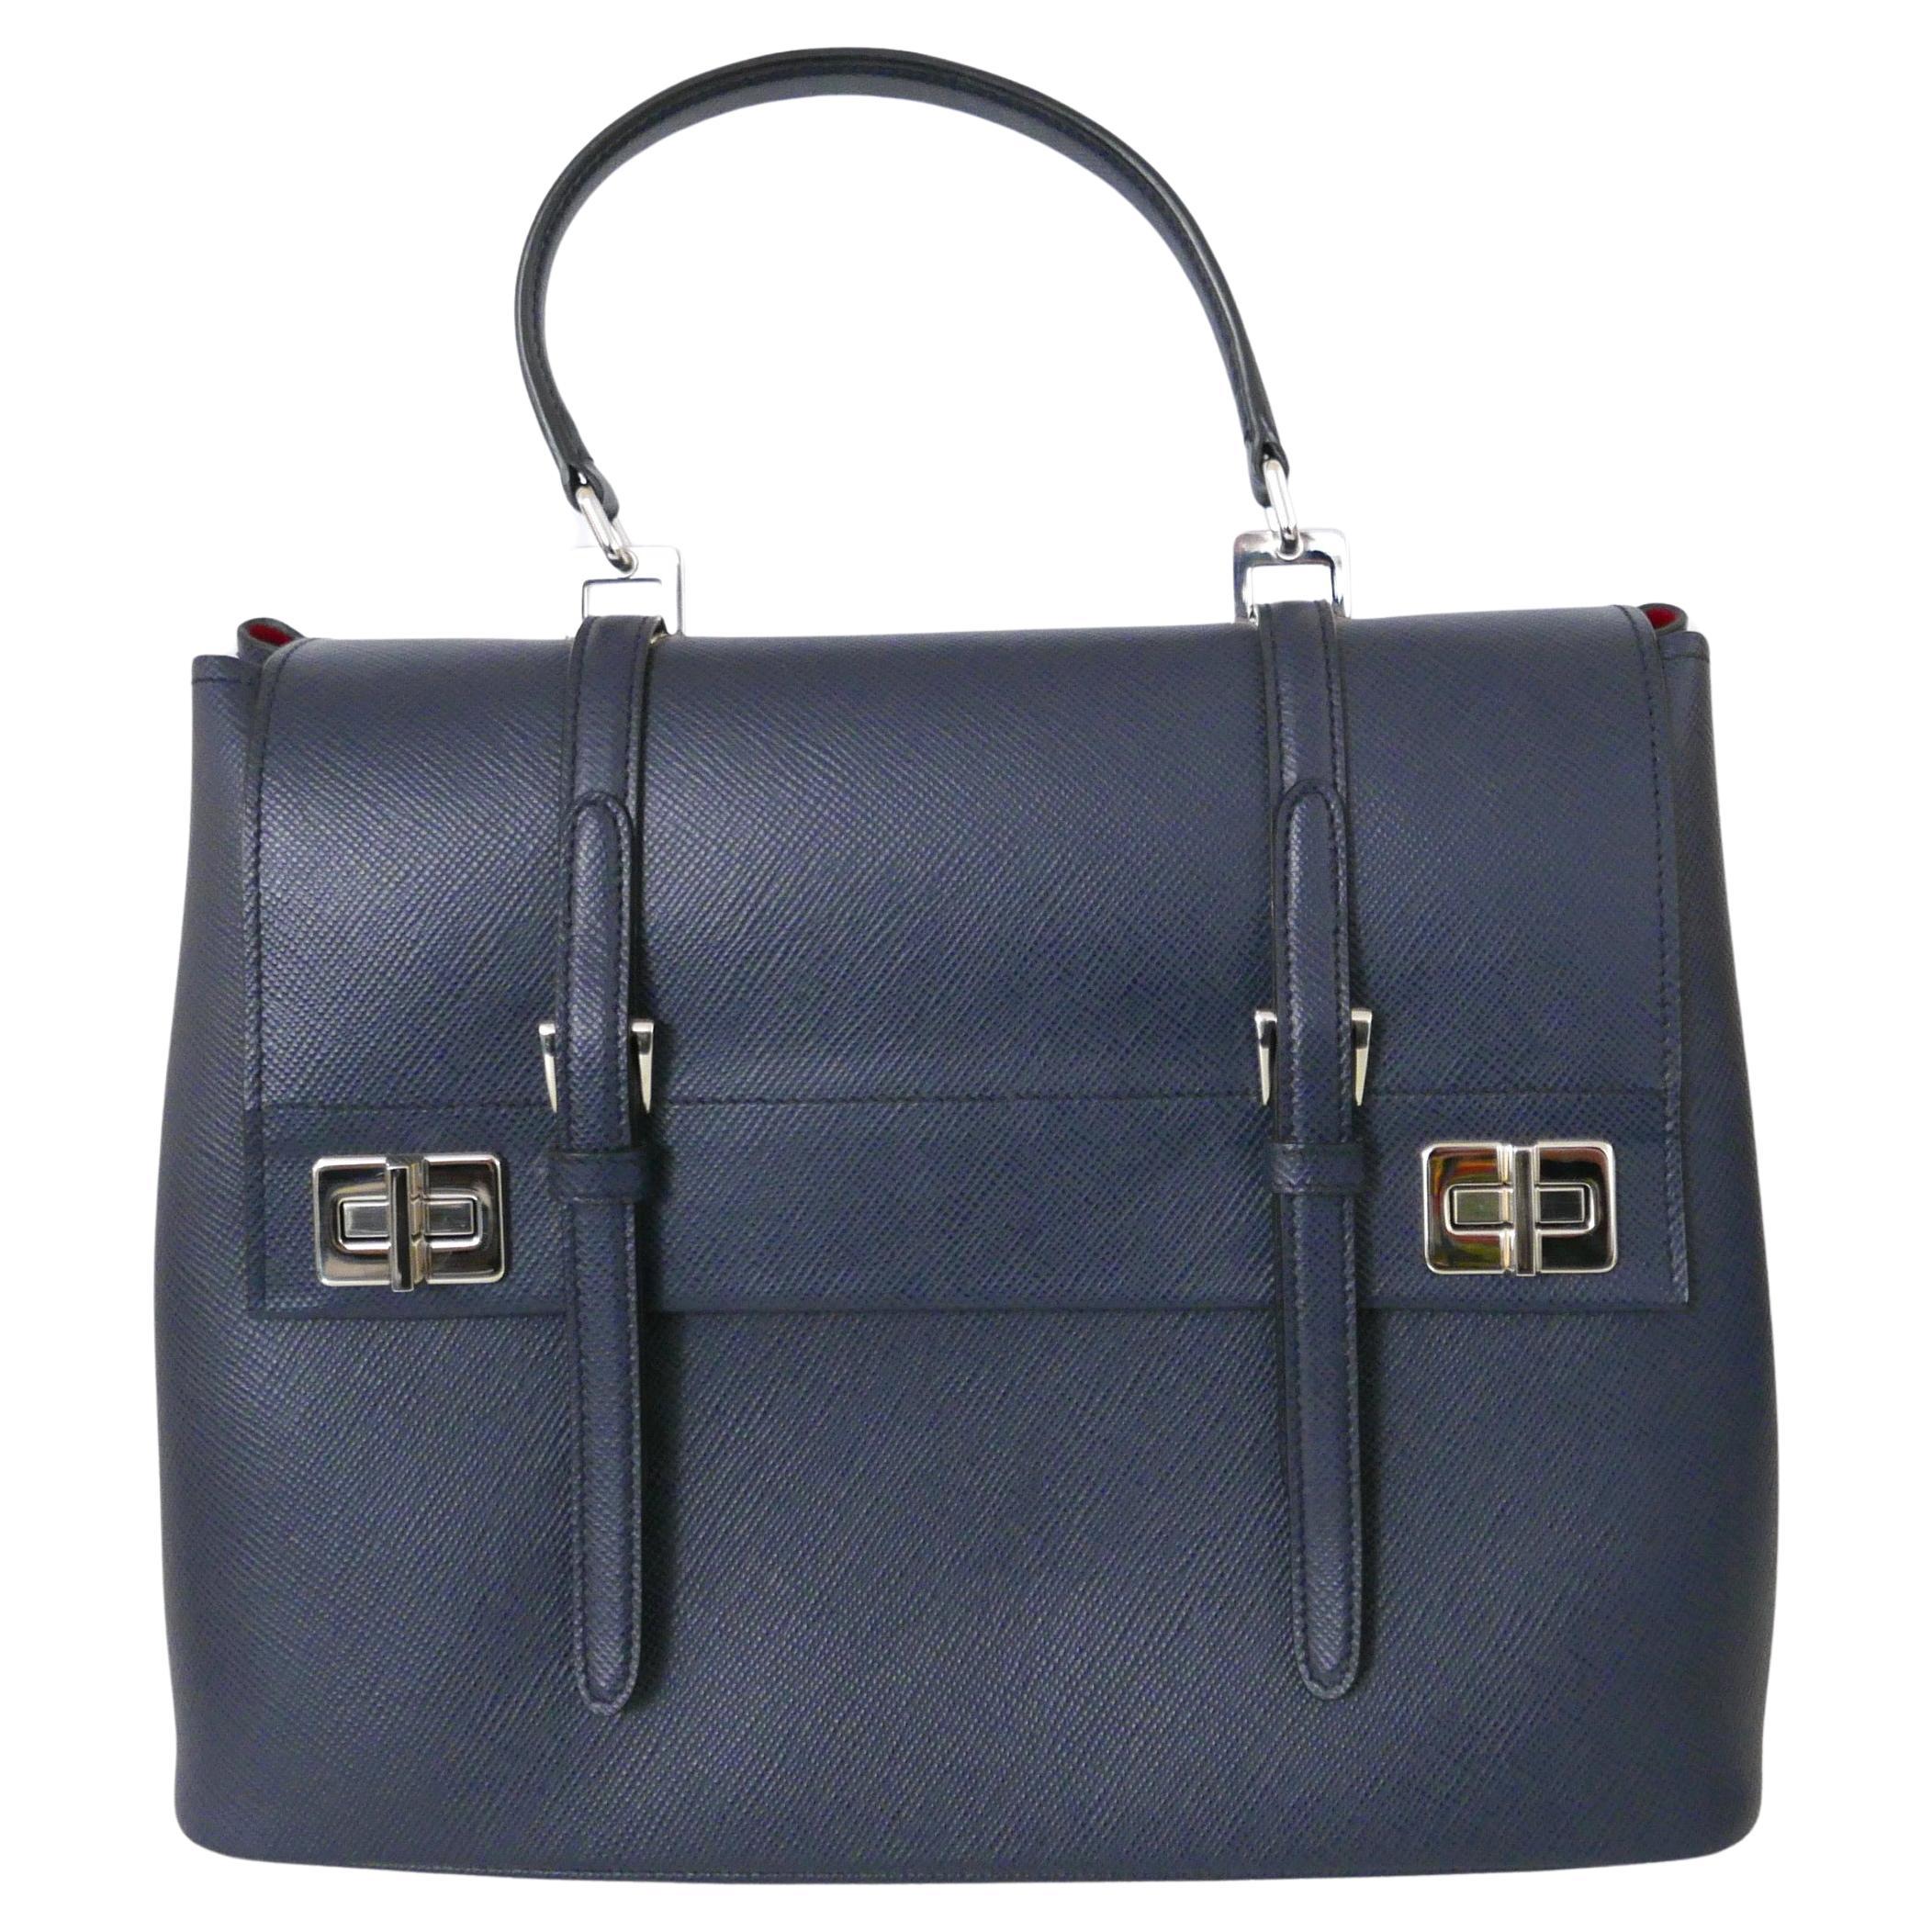 Prada AW14 Blue Saffiano Leather Double Satchel Bag For Sale